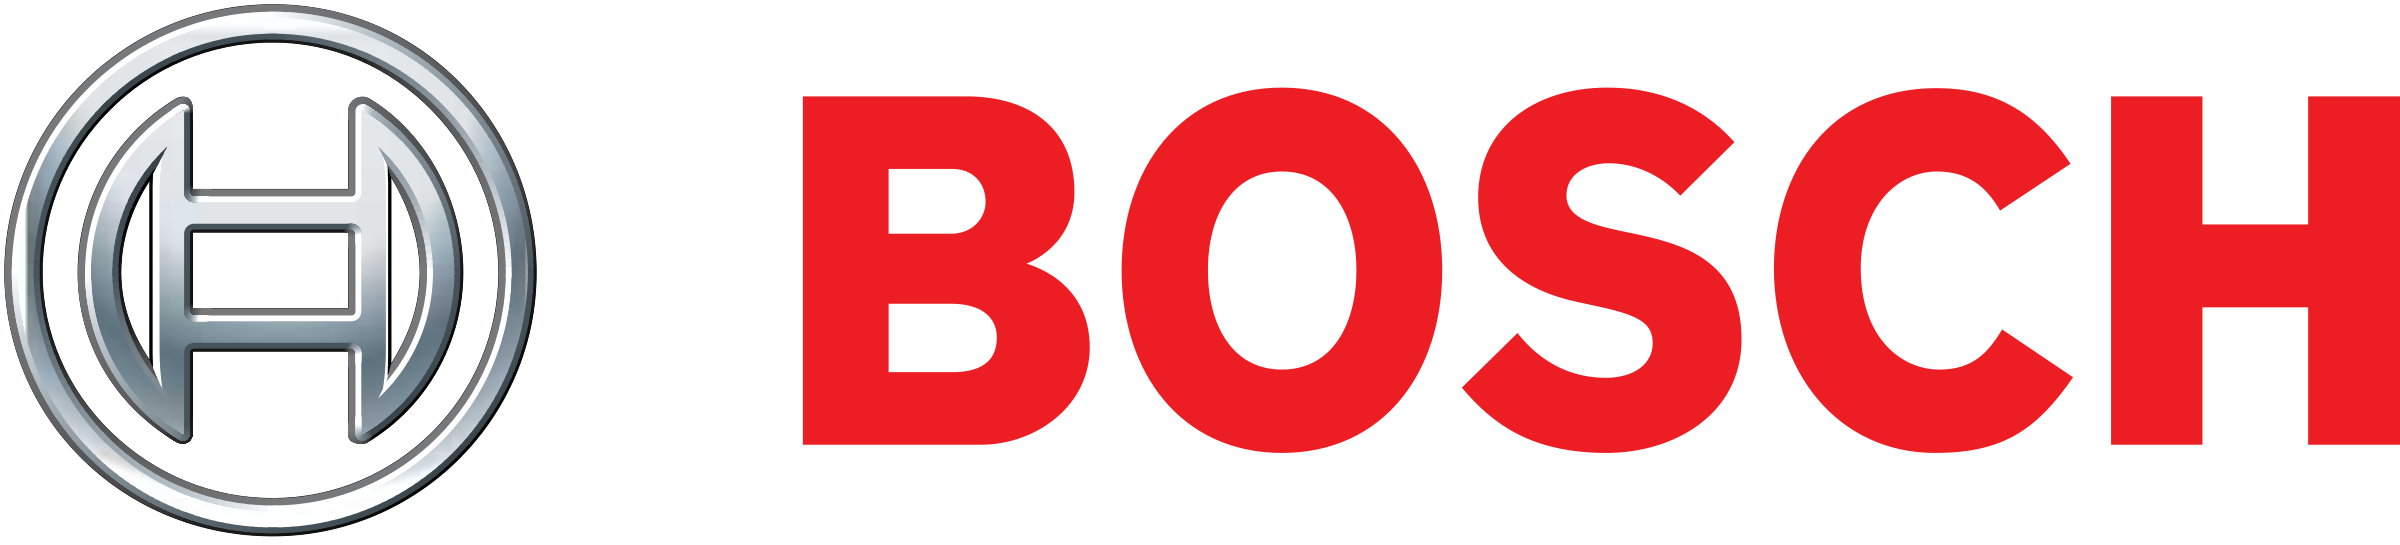 Bosch logo png transparent